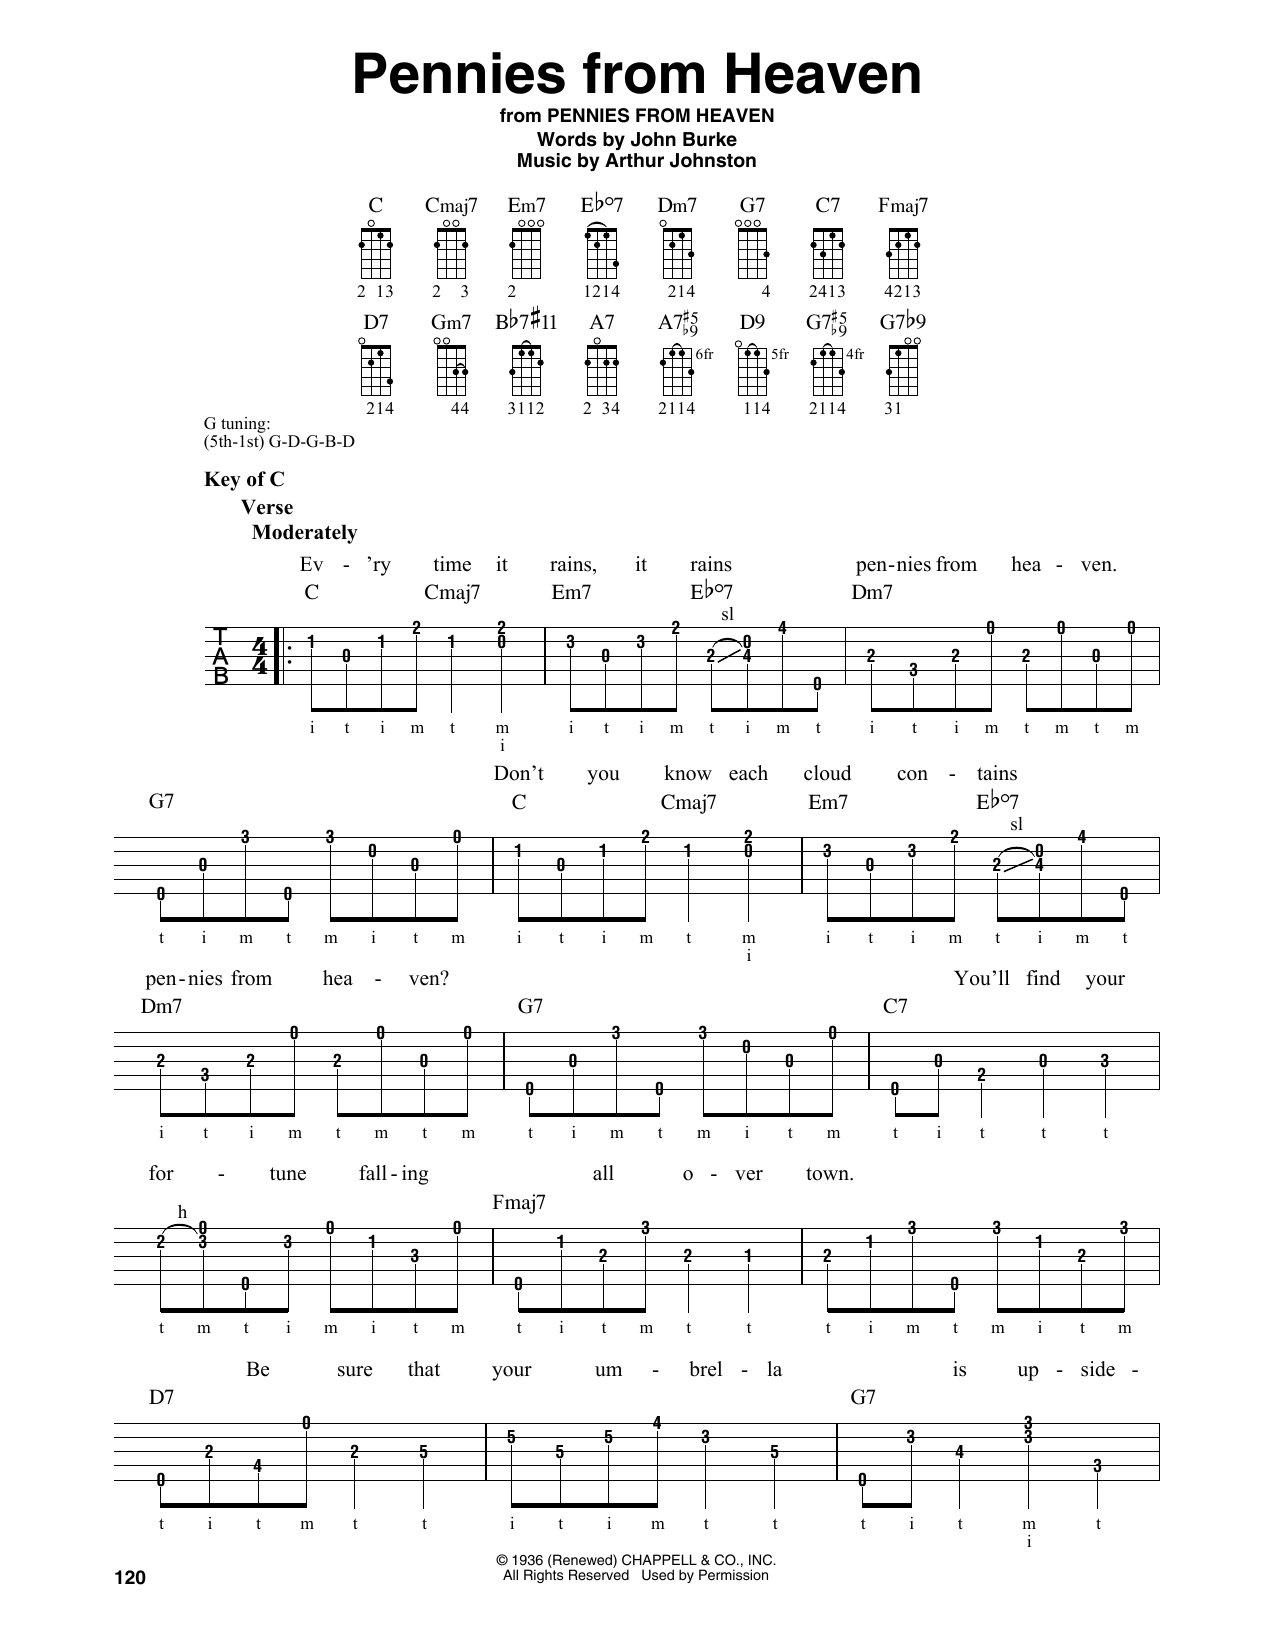 John Burke Pennies From Heaven Sheet Music Notes & Chords for Banjo - Download or Print PDF